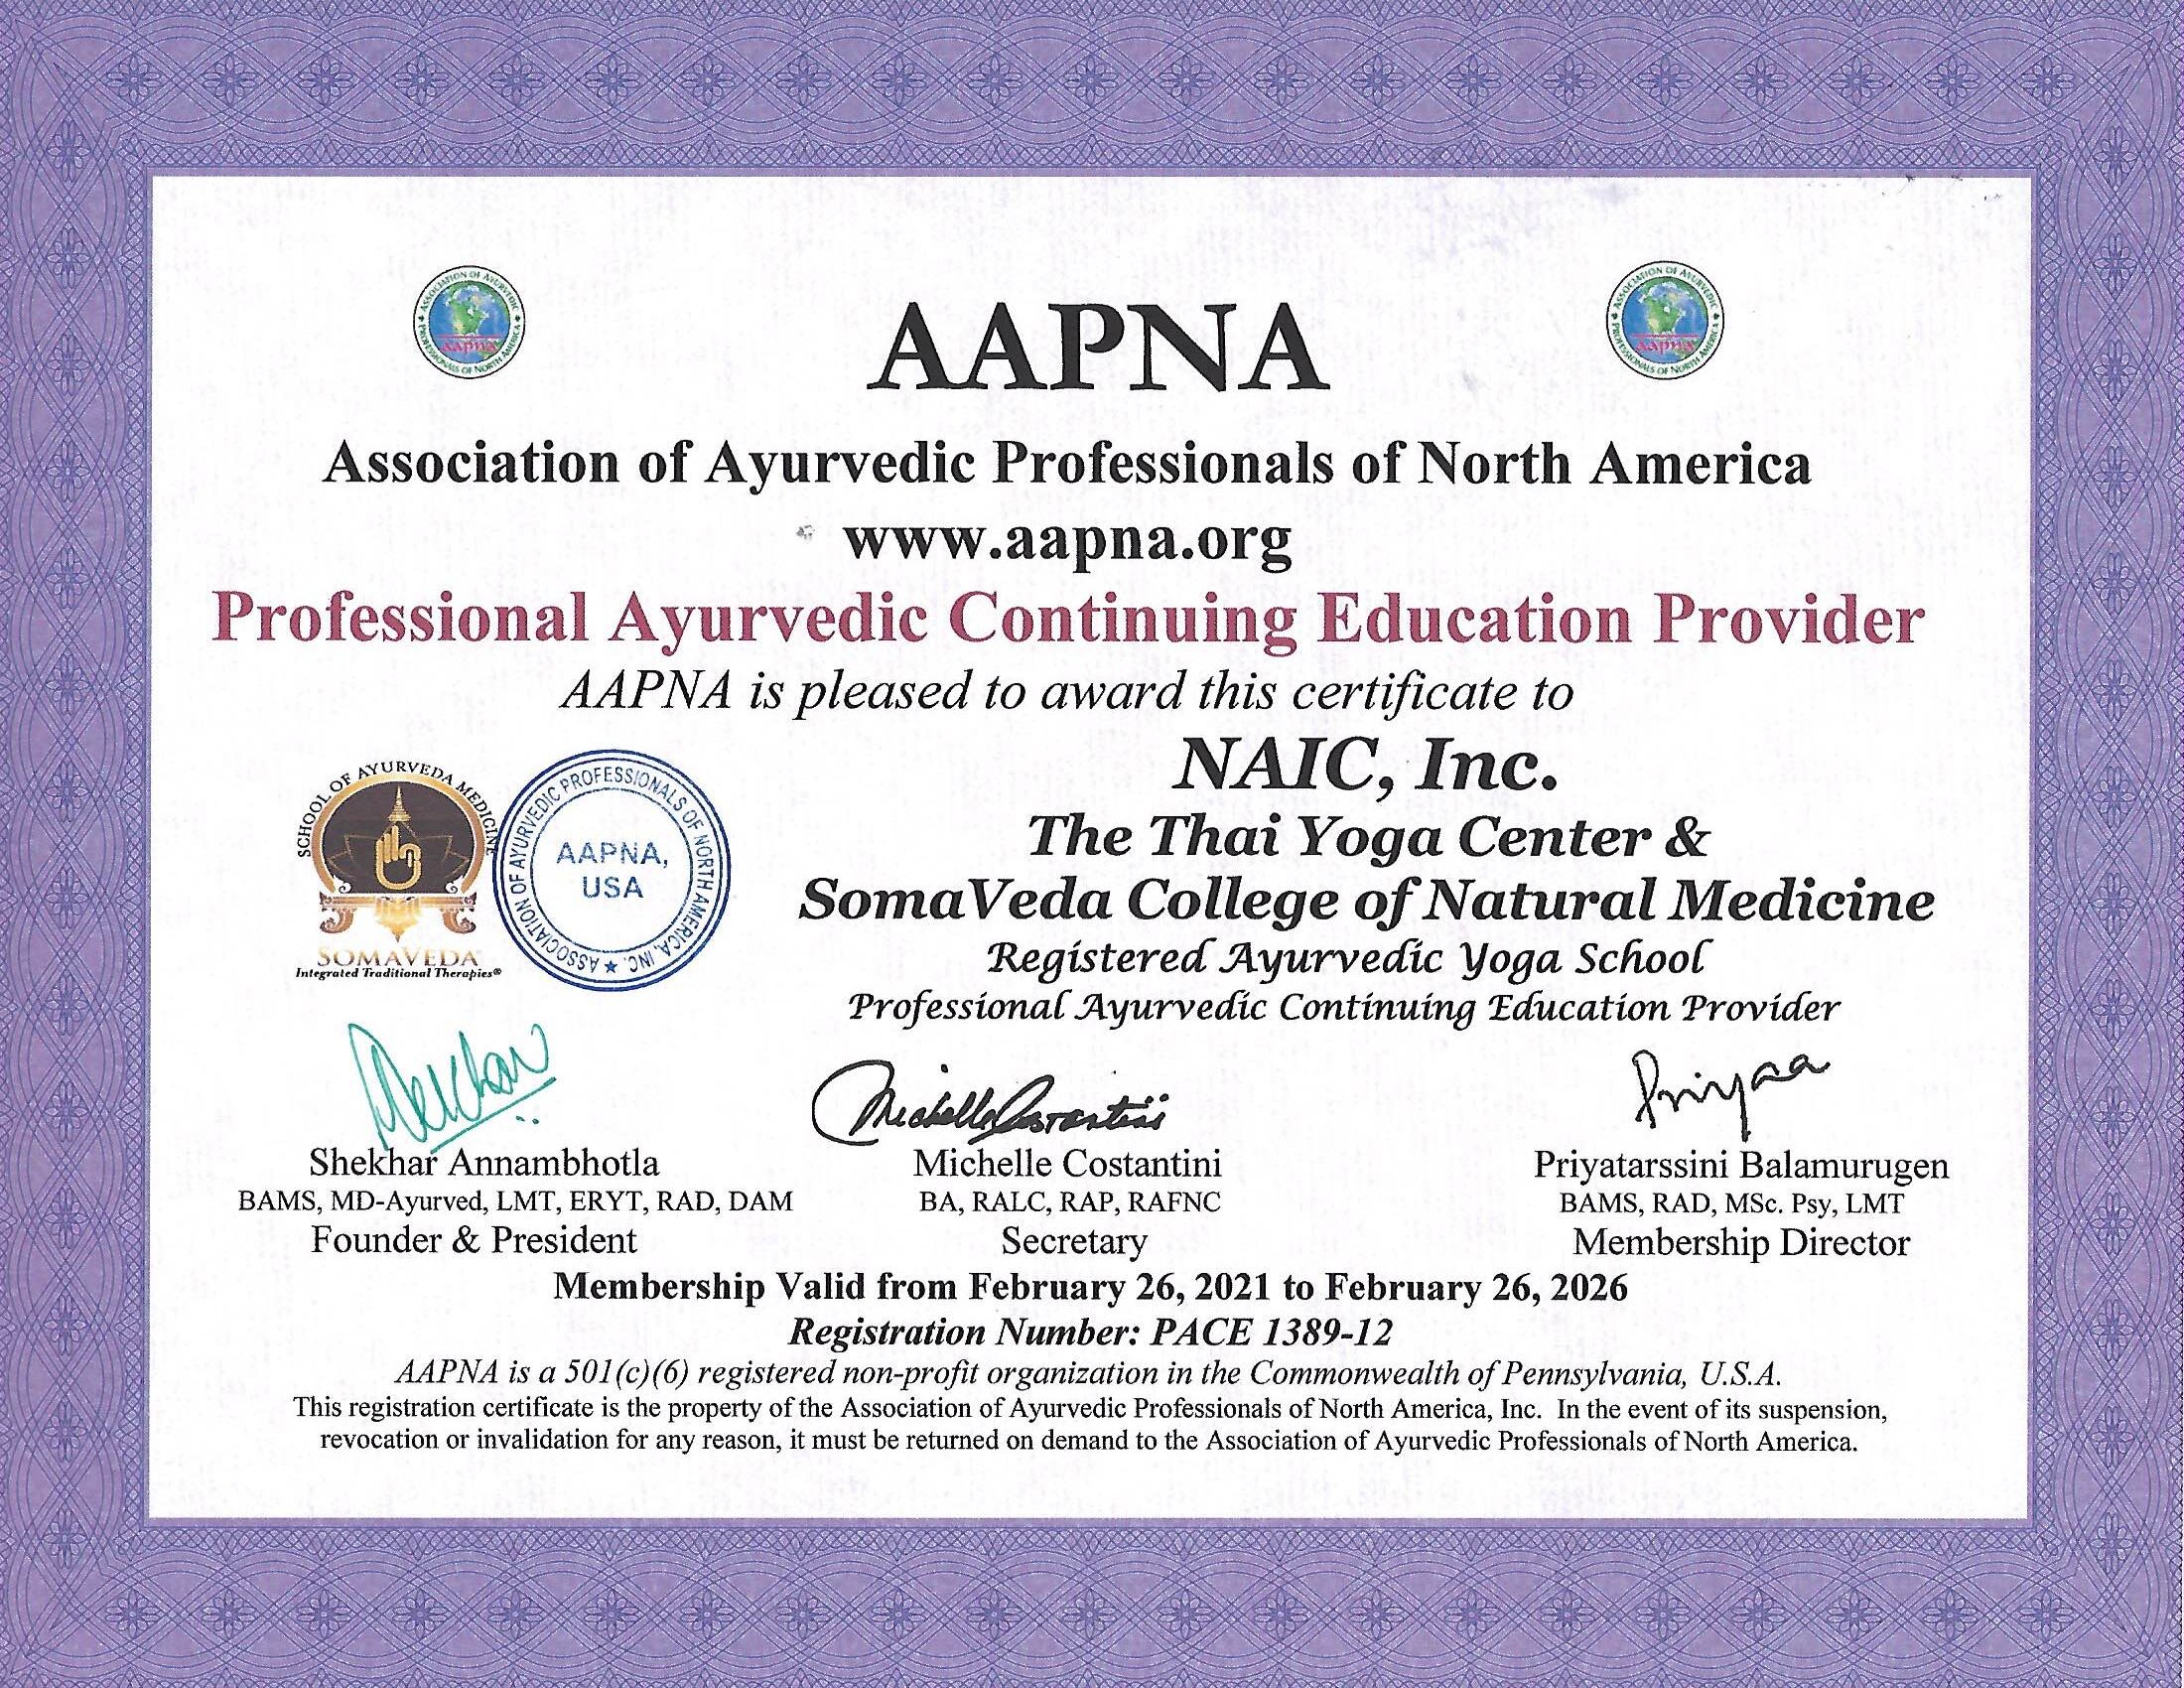 AAPNA PACE School Certificate The Thai Yoga Center